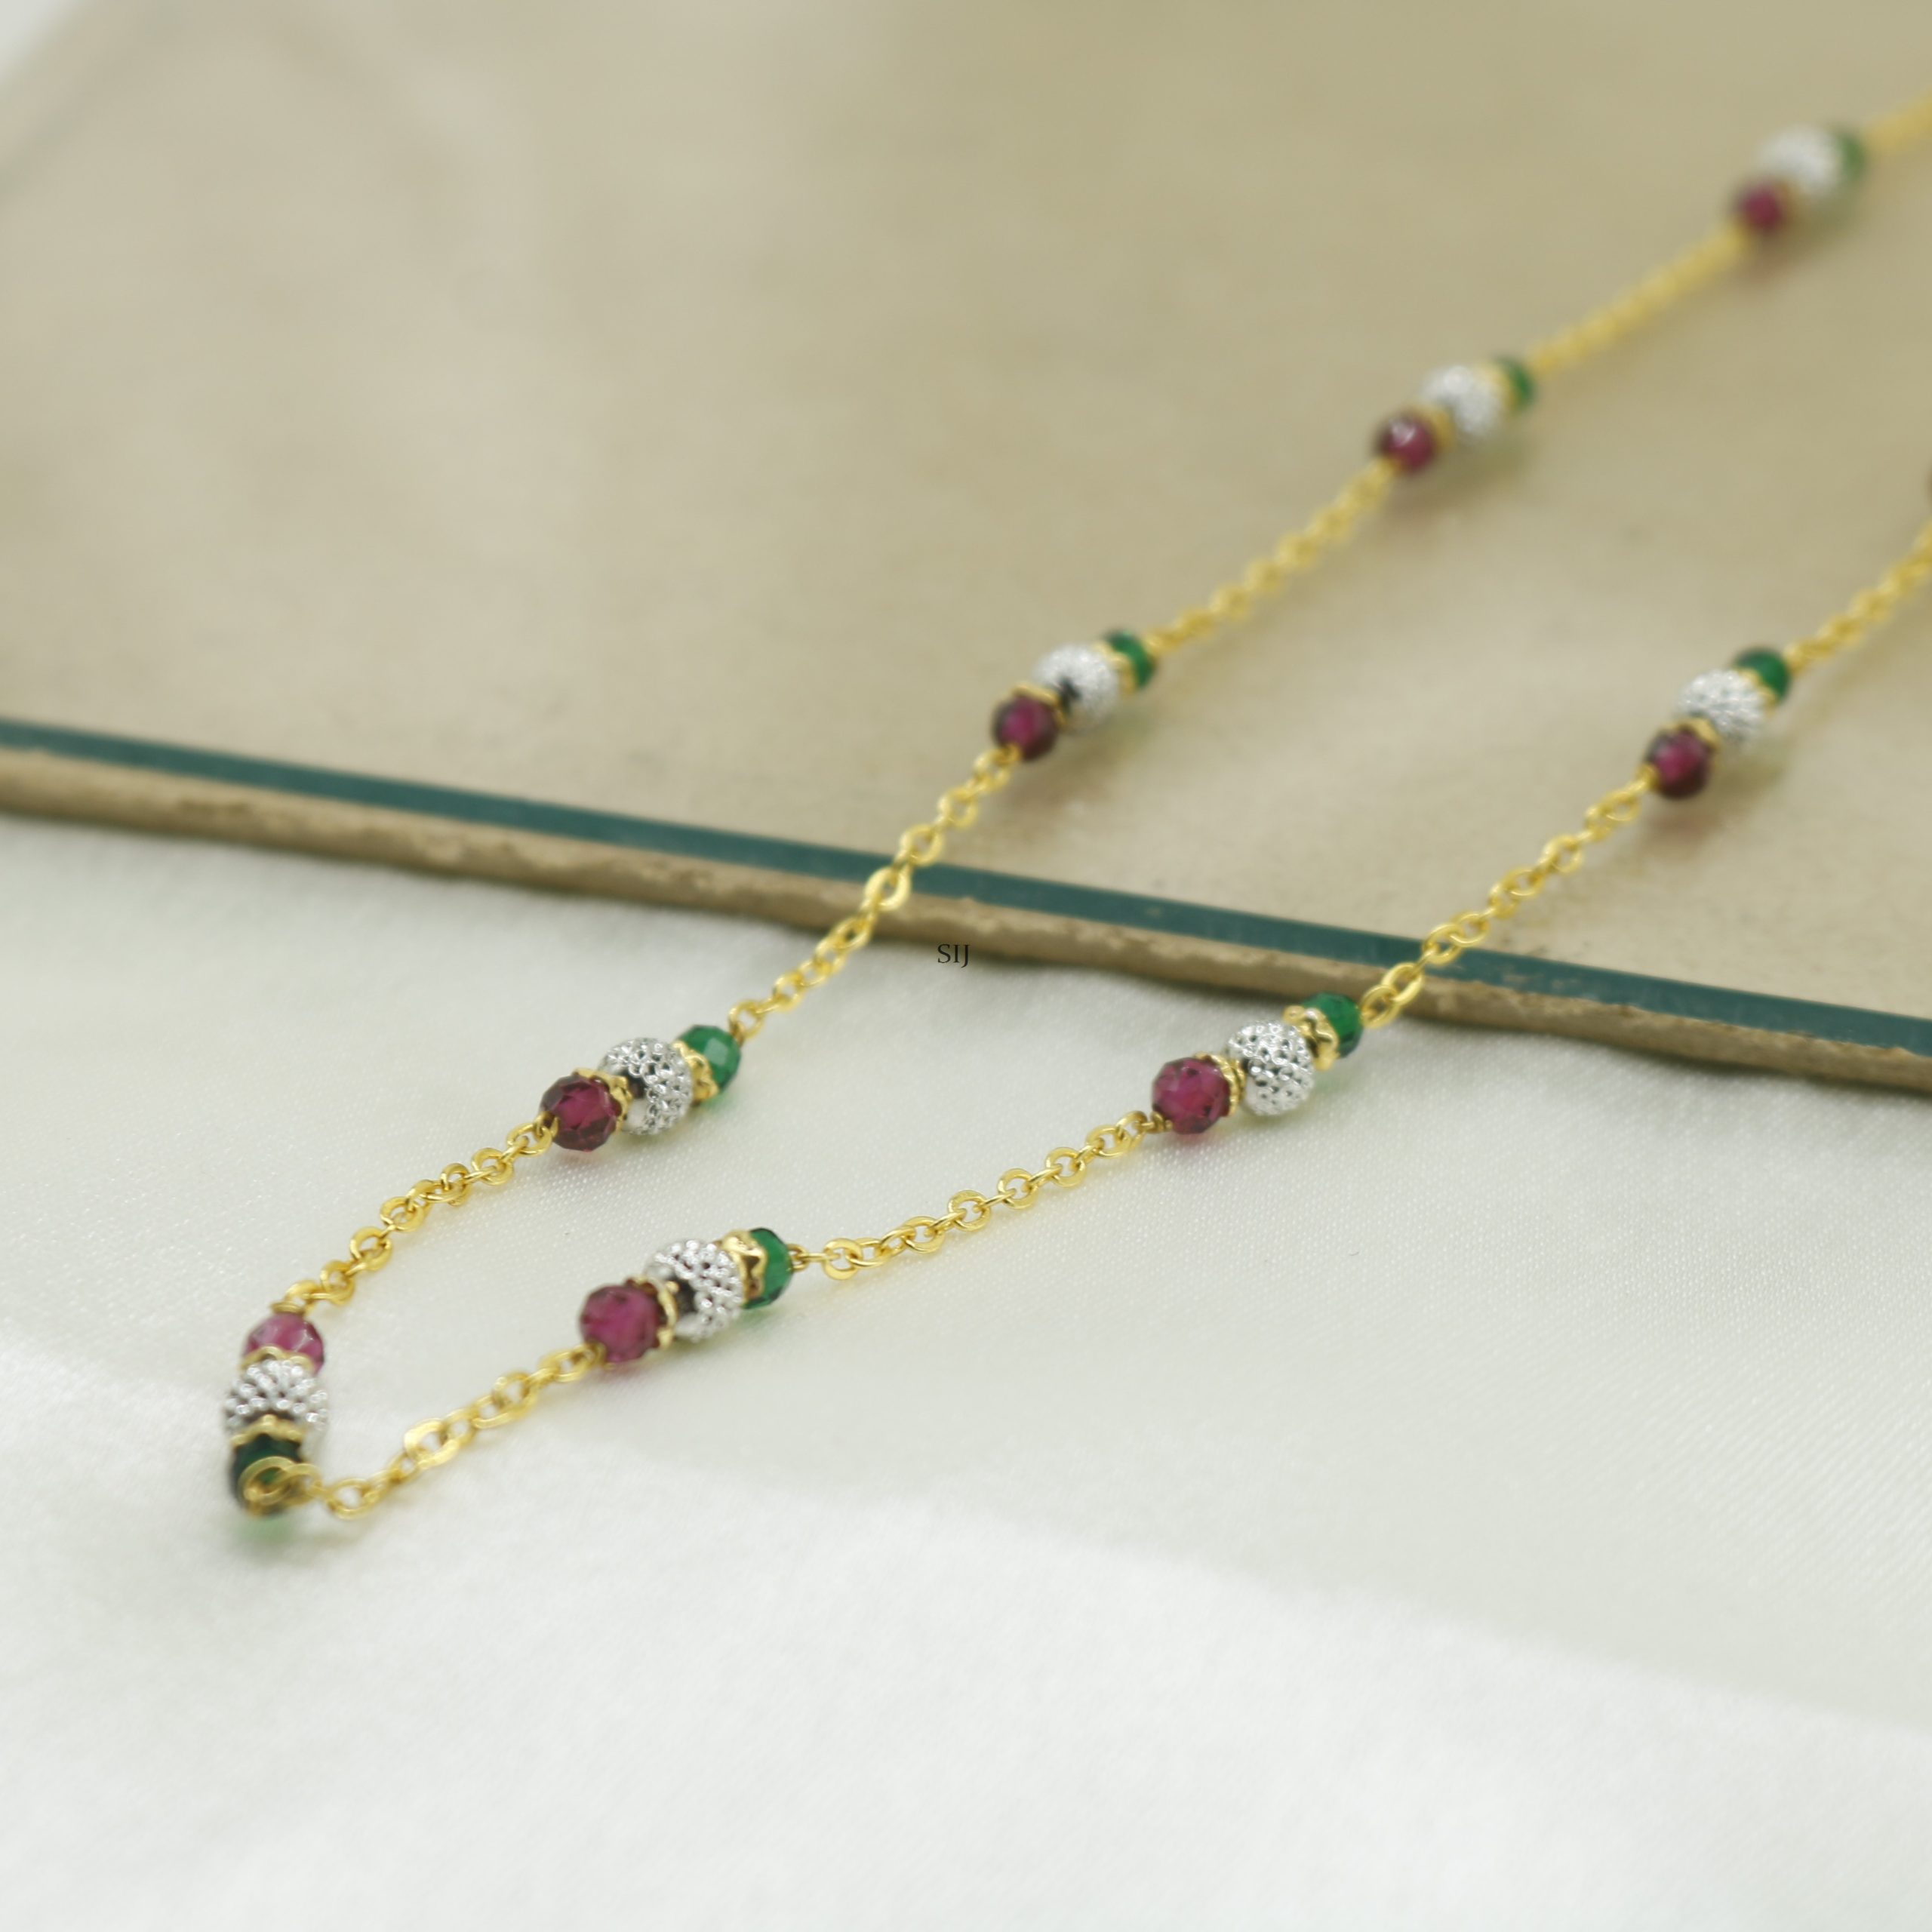 Twinkling Golden Bead Chain Design